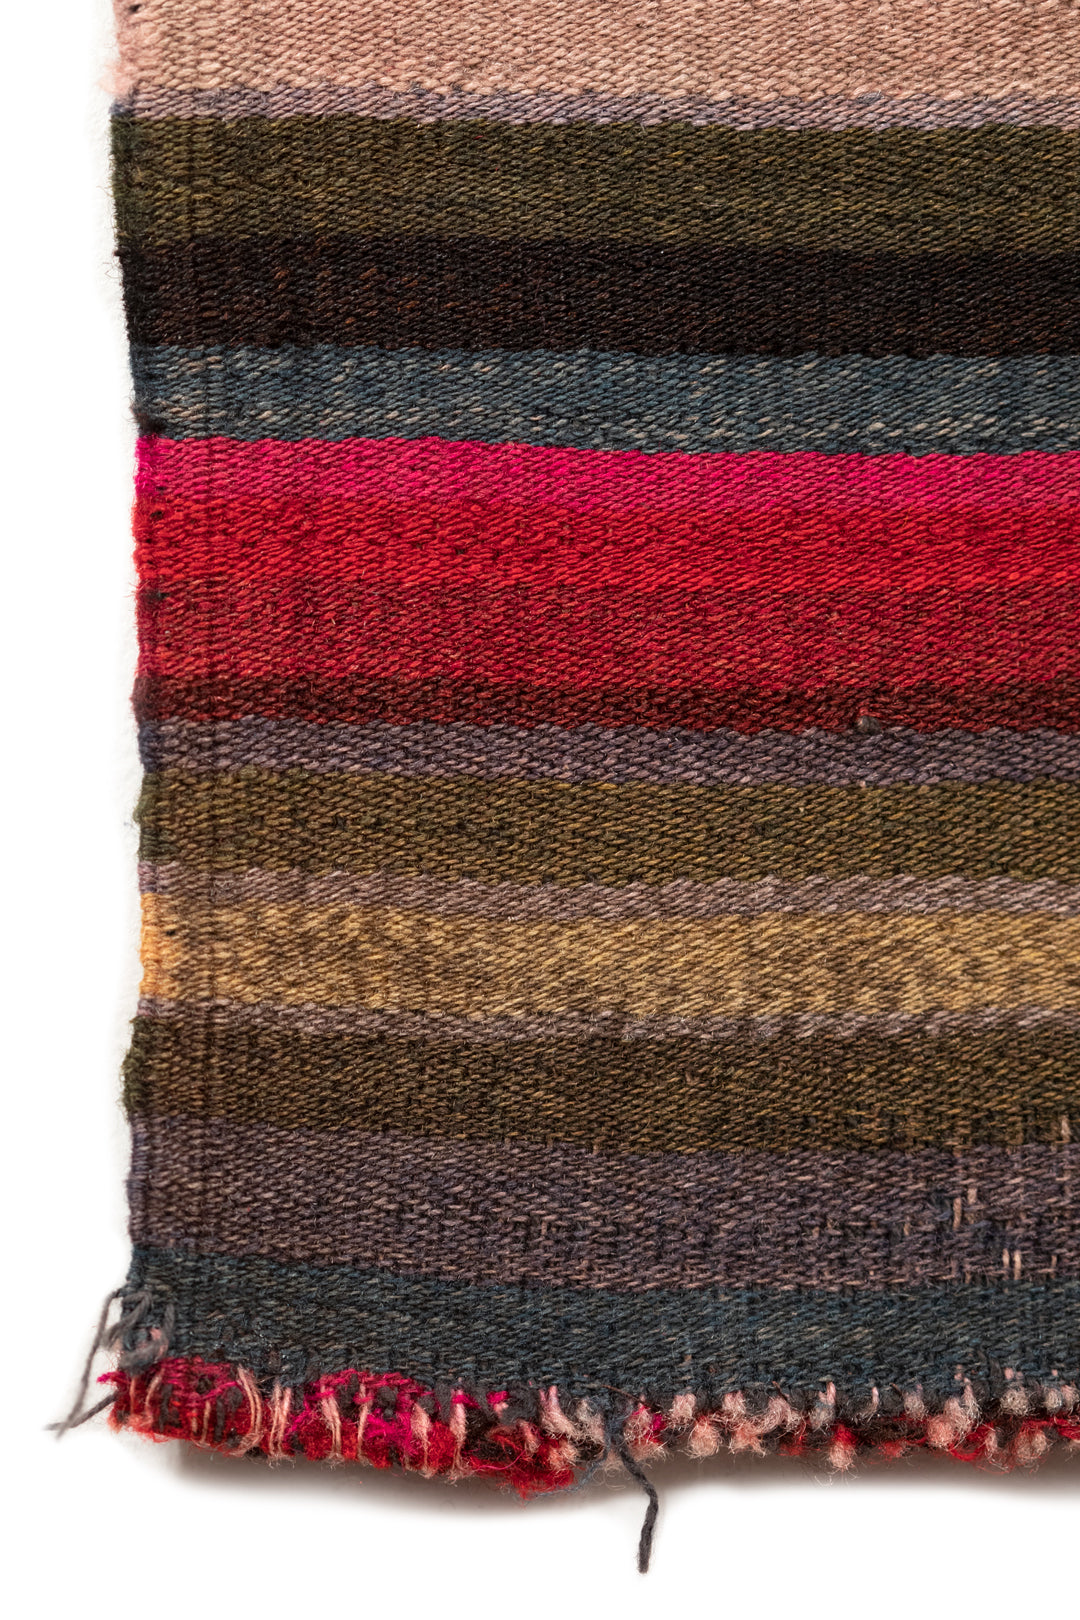 Wool Blanket Fragment